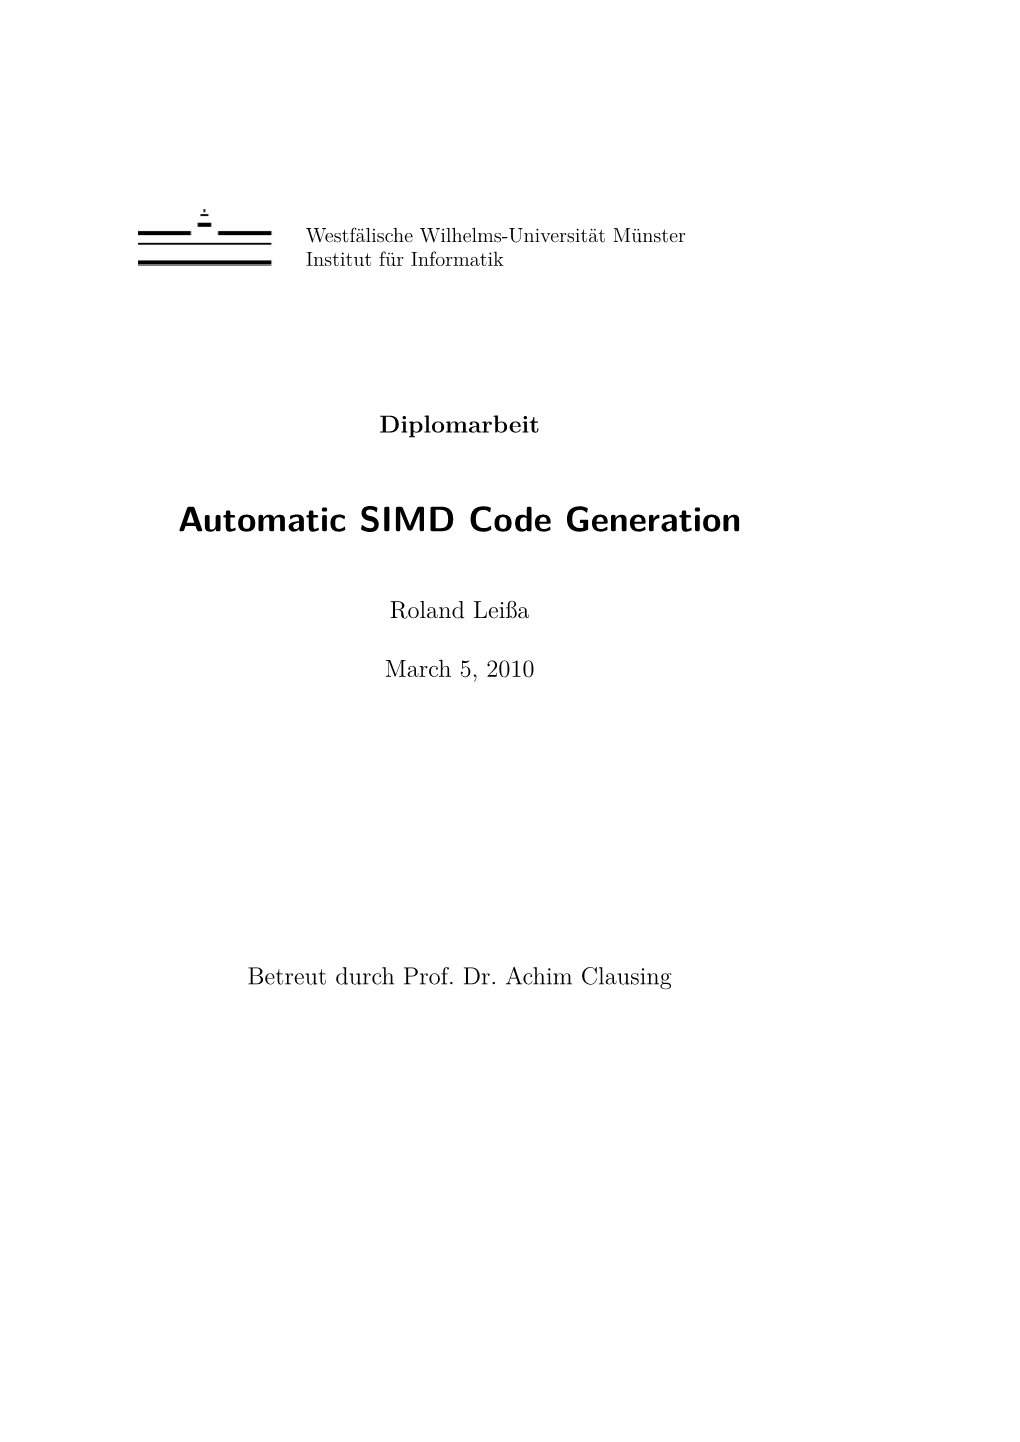 Automatic SIMD Code Generation